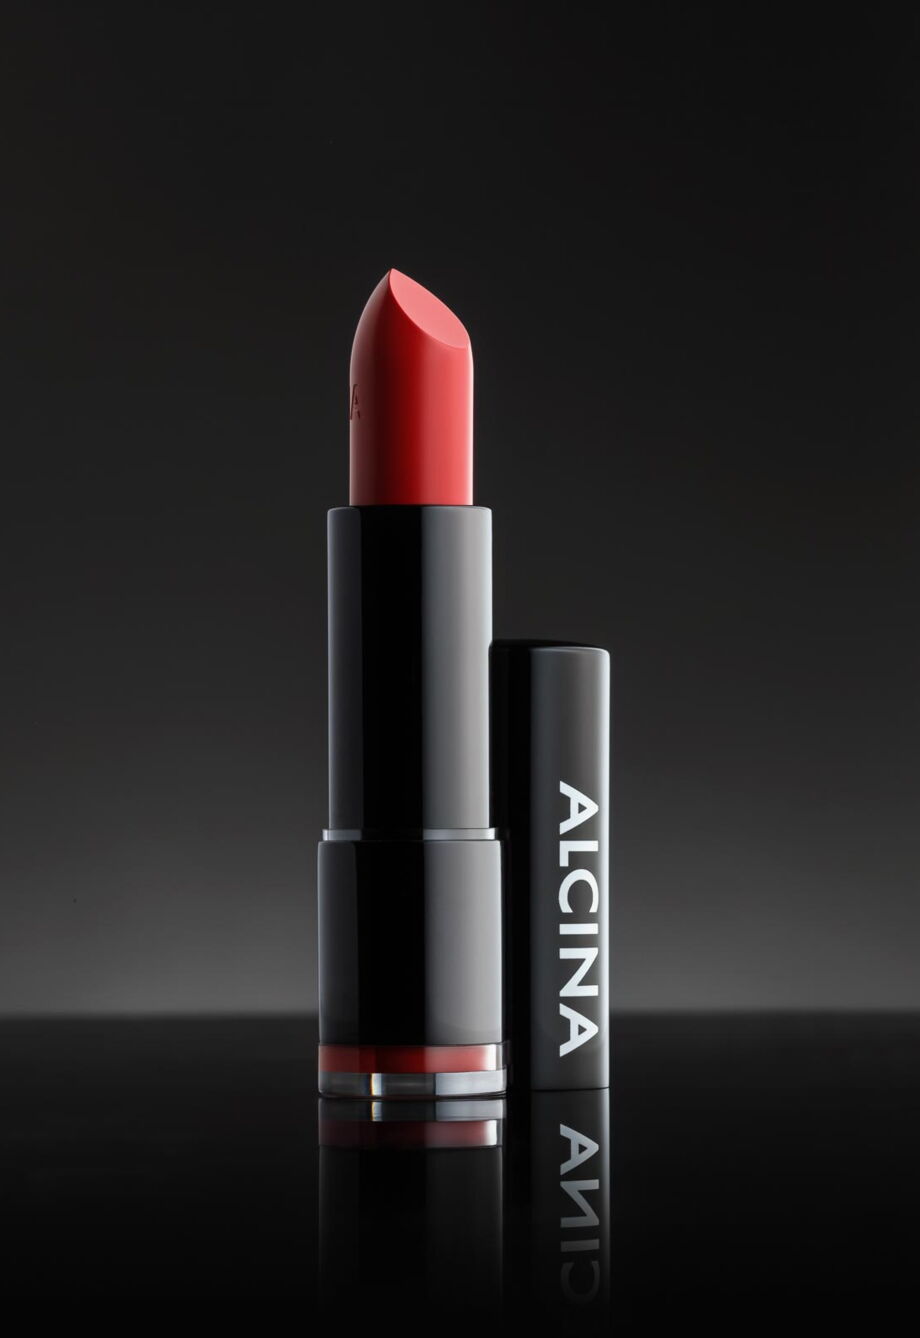 Produktfotografie: roter Alcina Lippenstift mit Deckel